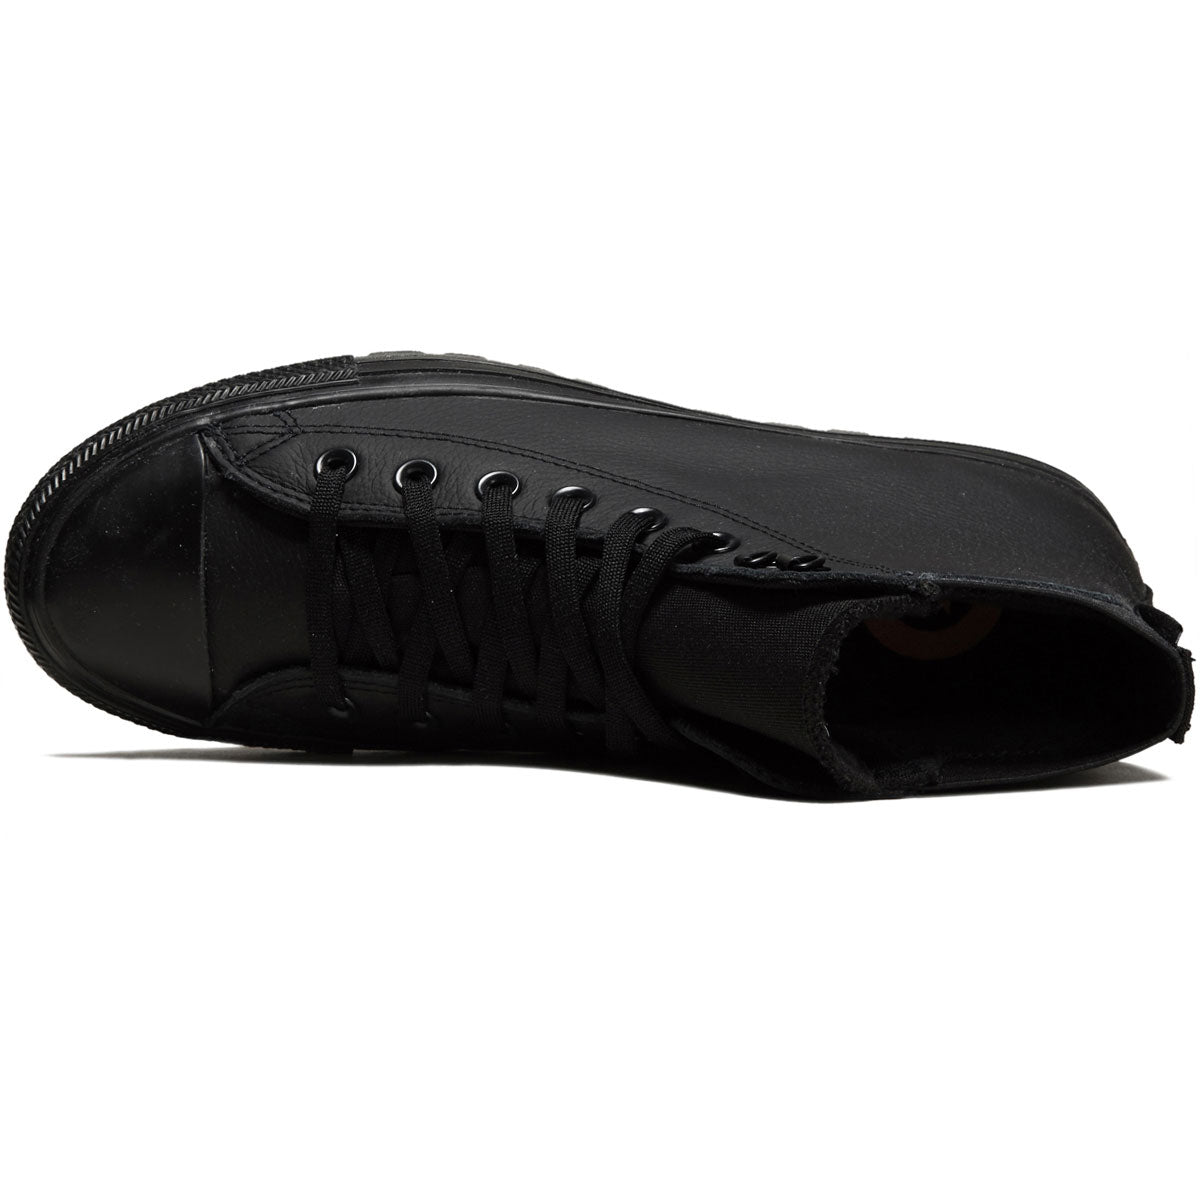 Converse Ctas City Trek Wp Hi Shoes - Black/Blackblack image 3